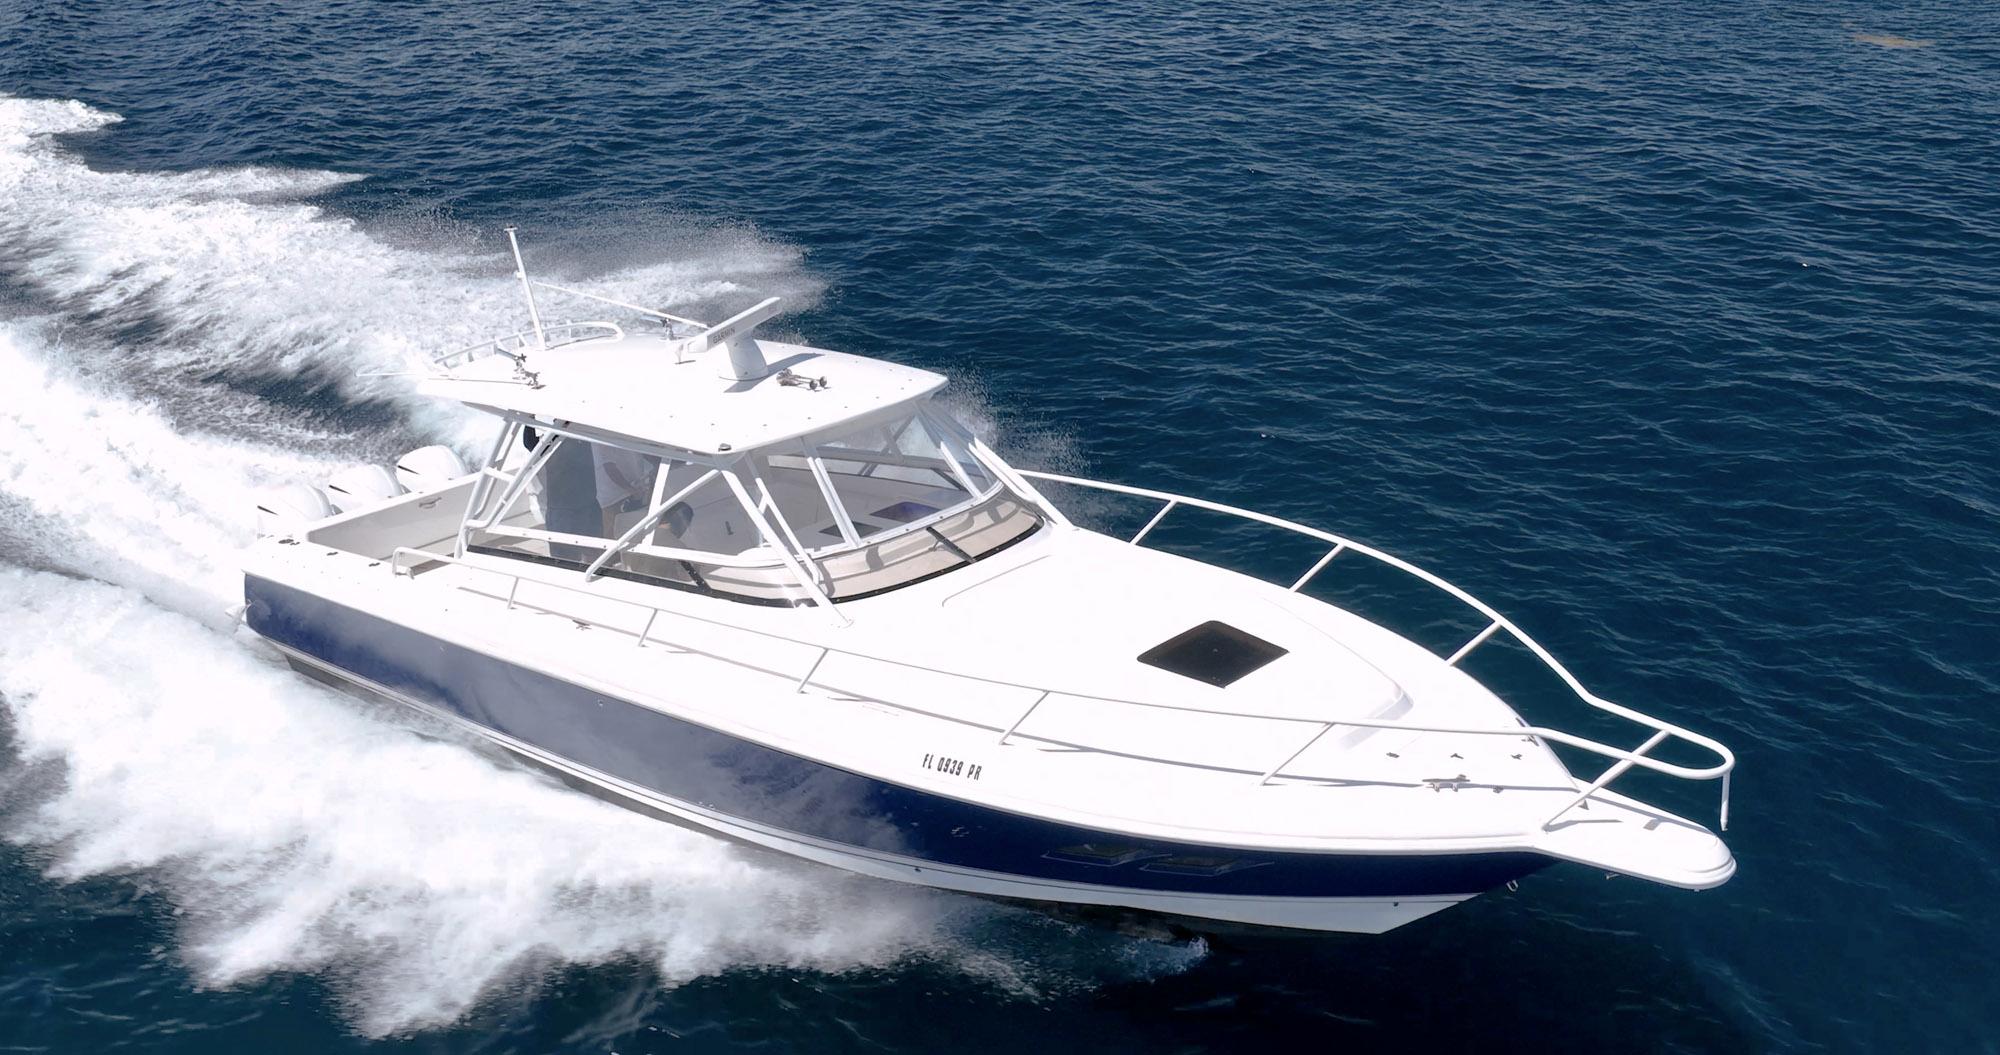 2014 Intrepid 390 Sport Yacht